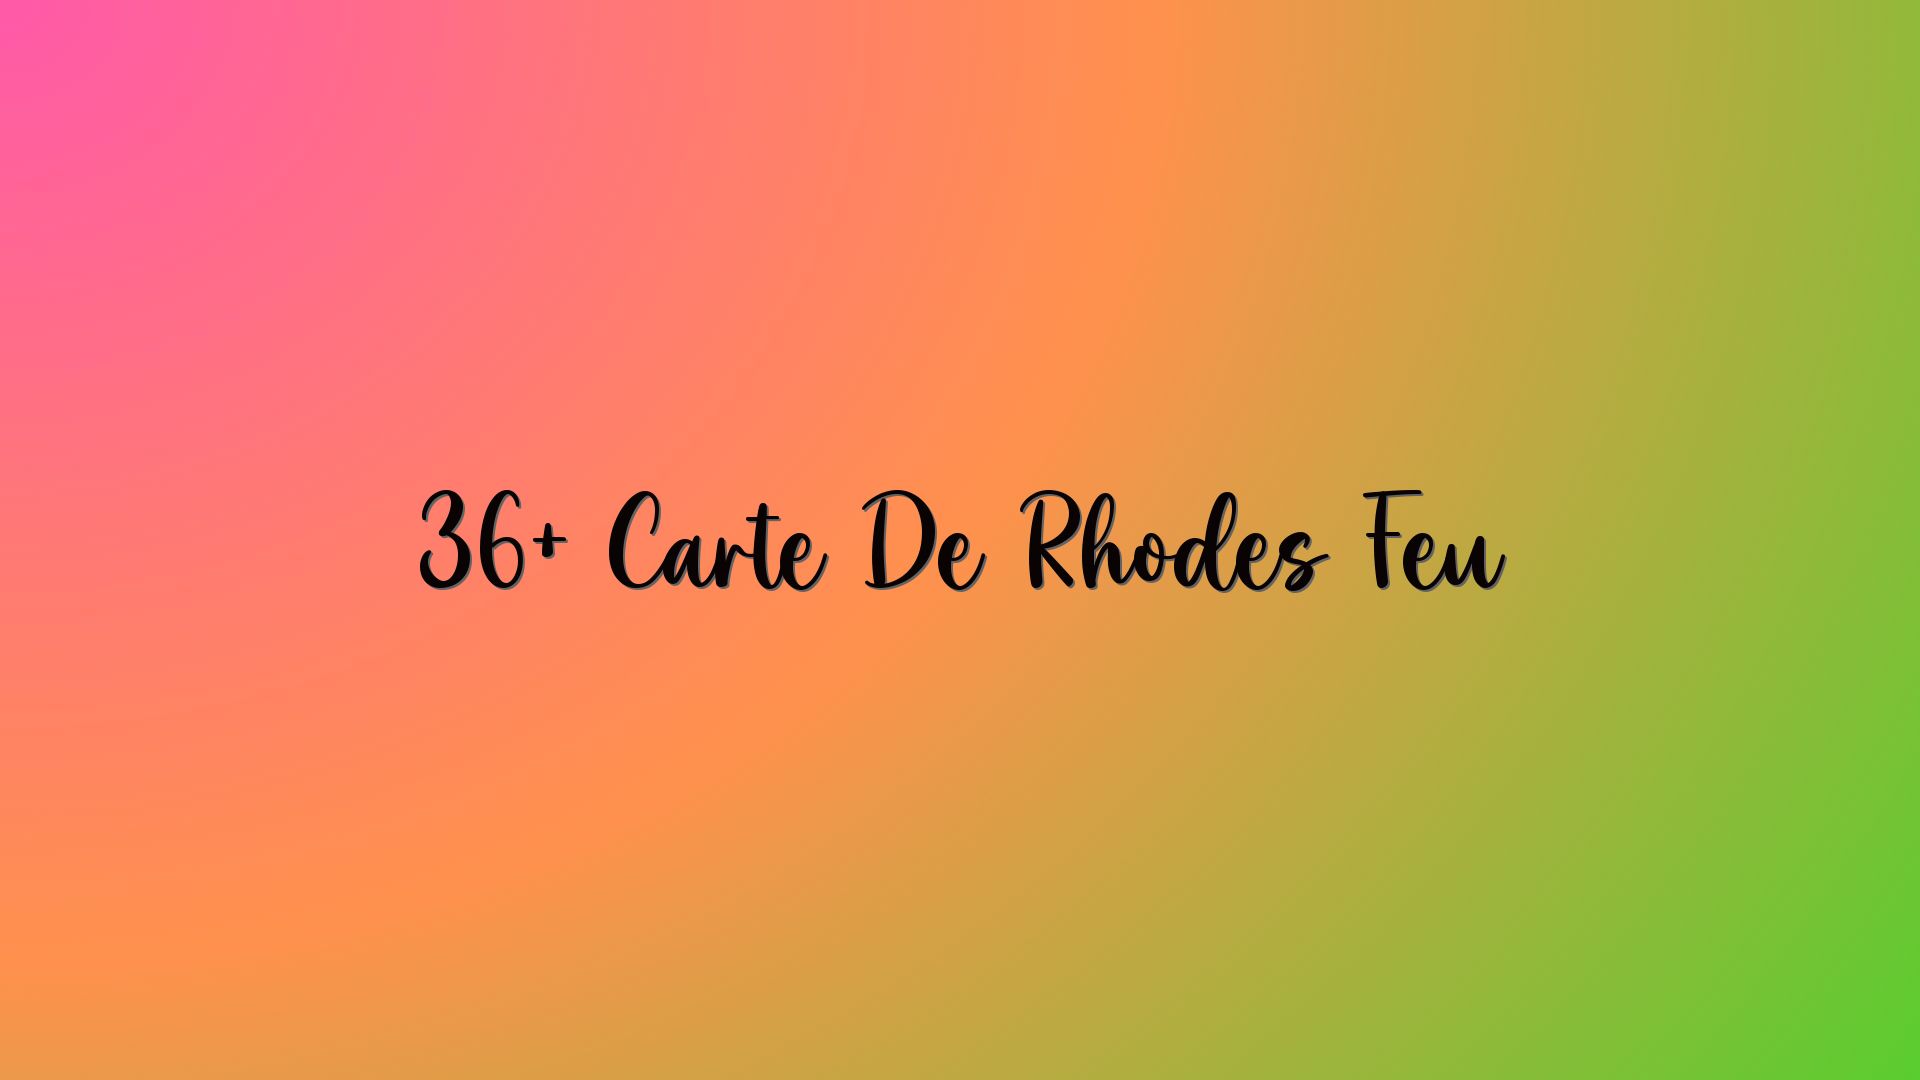 36+ Carte De Rhodes Feu